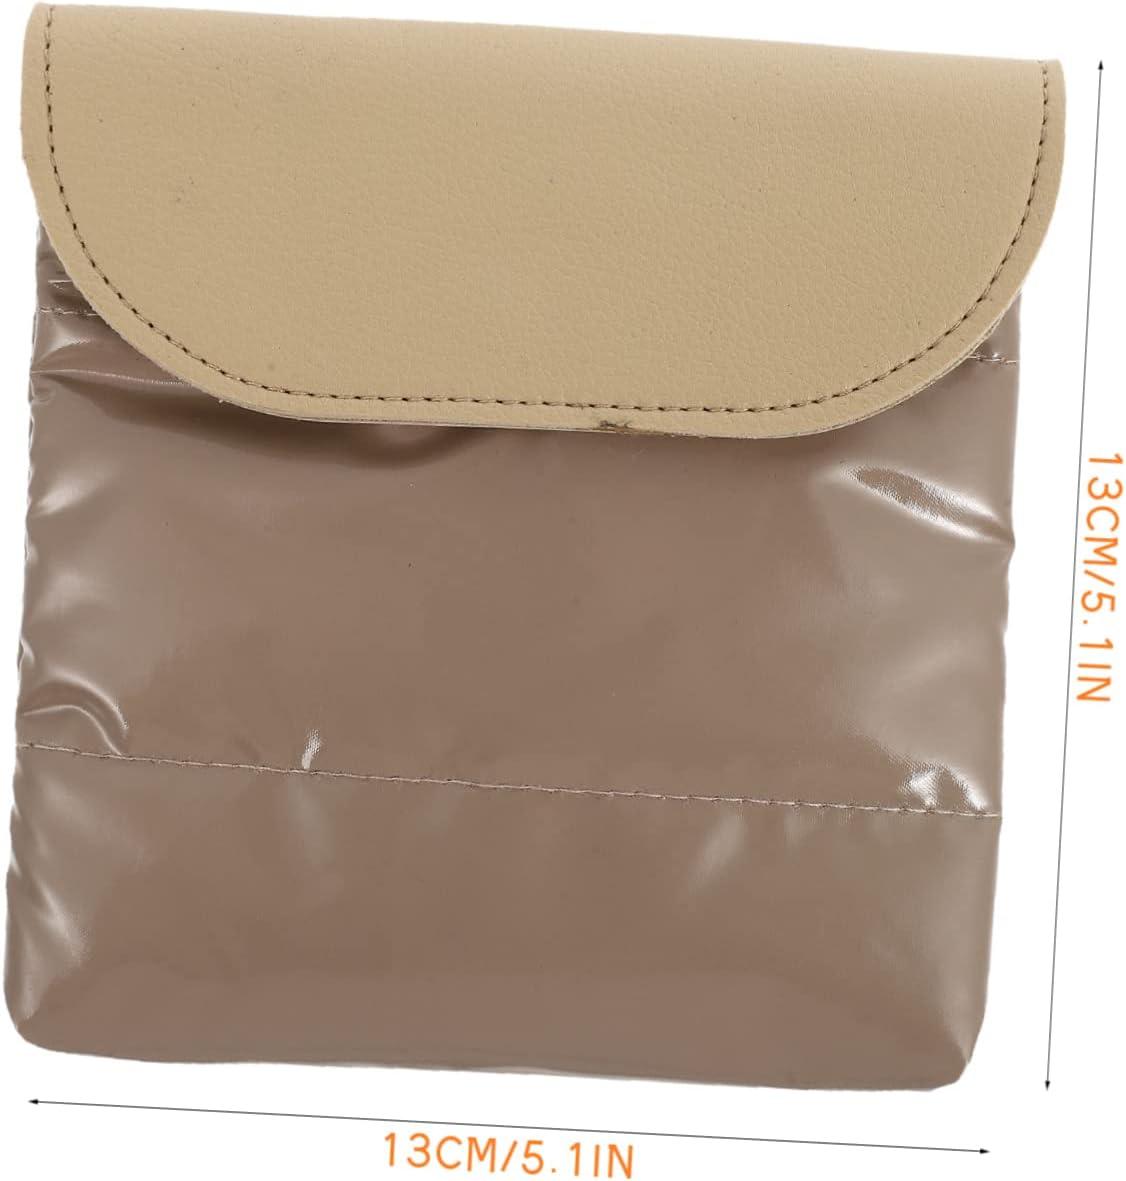 Healifty Period Bag 4pcs Plush Storage Bag Cute Sets Winter Sets for Women  Purse Holder Travel